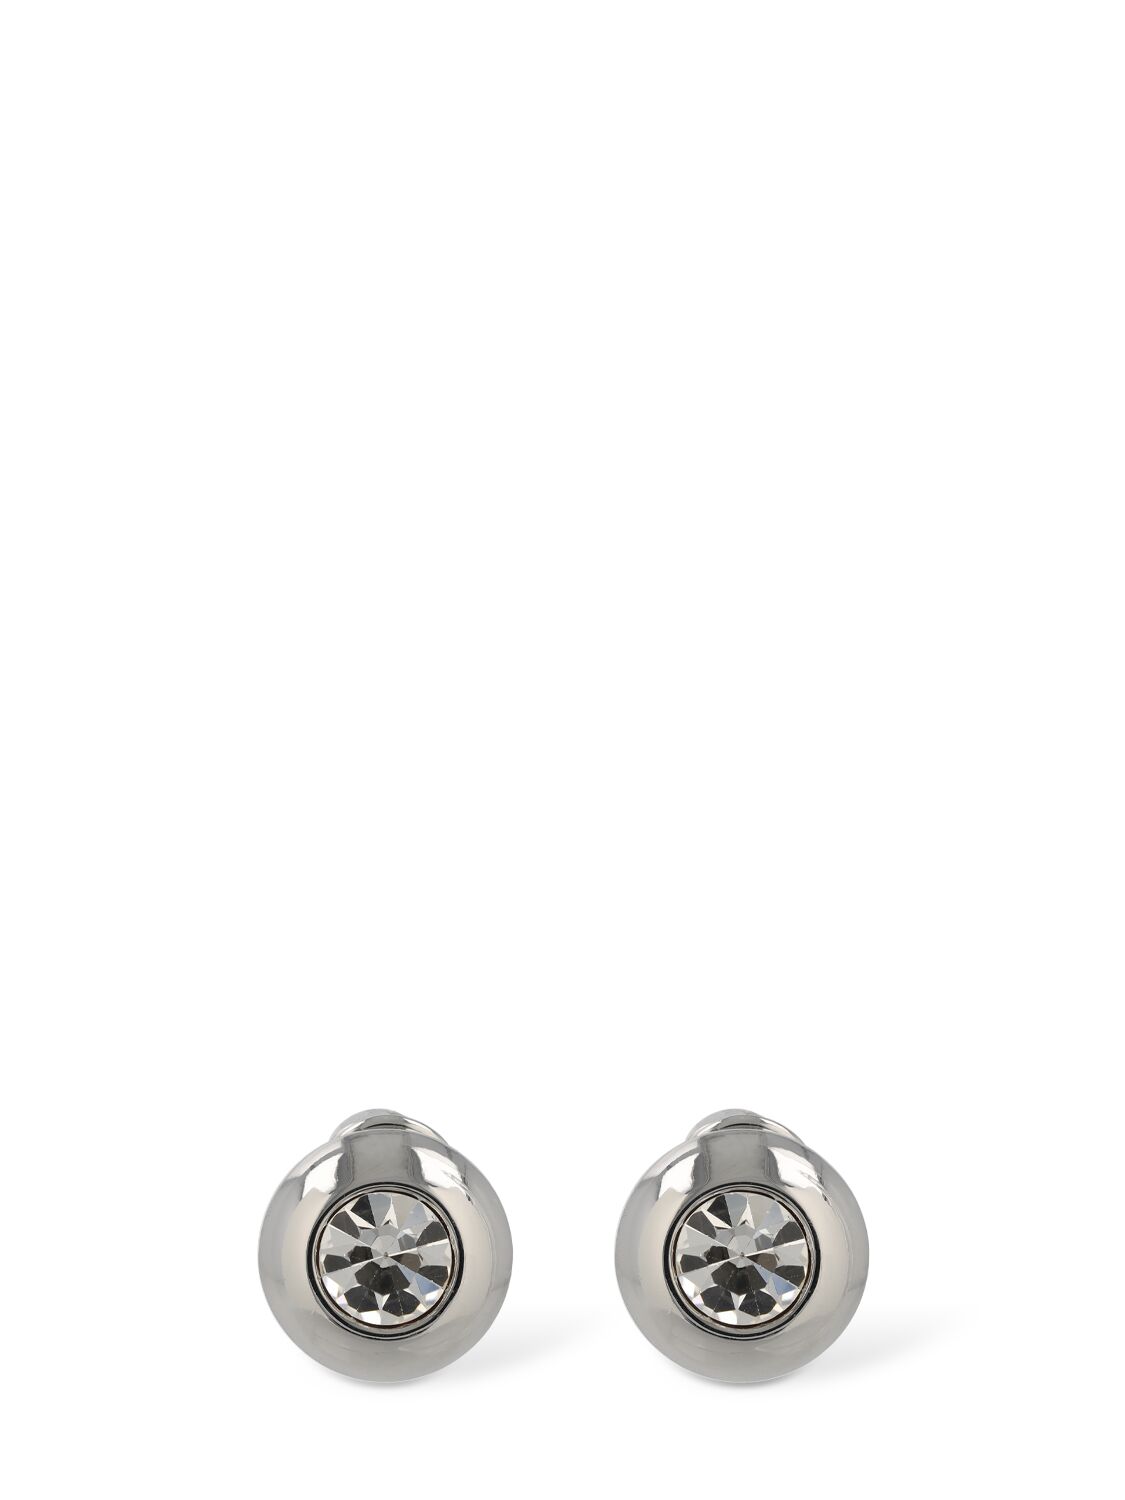 Image of Crystal Dome Stud Earrings